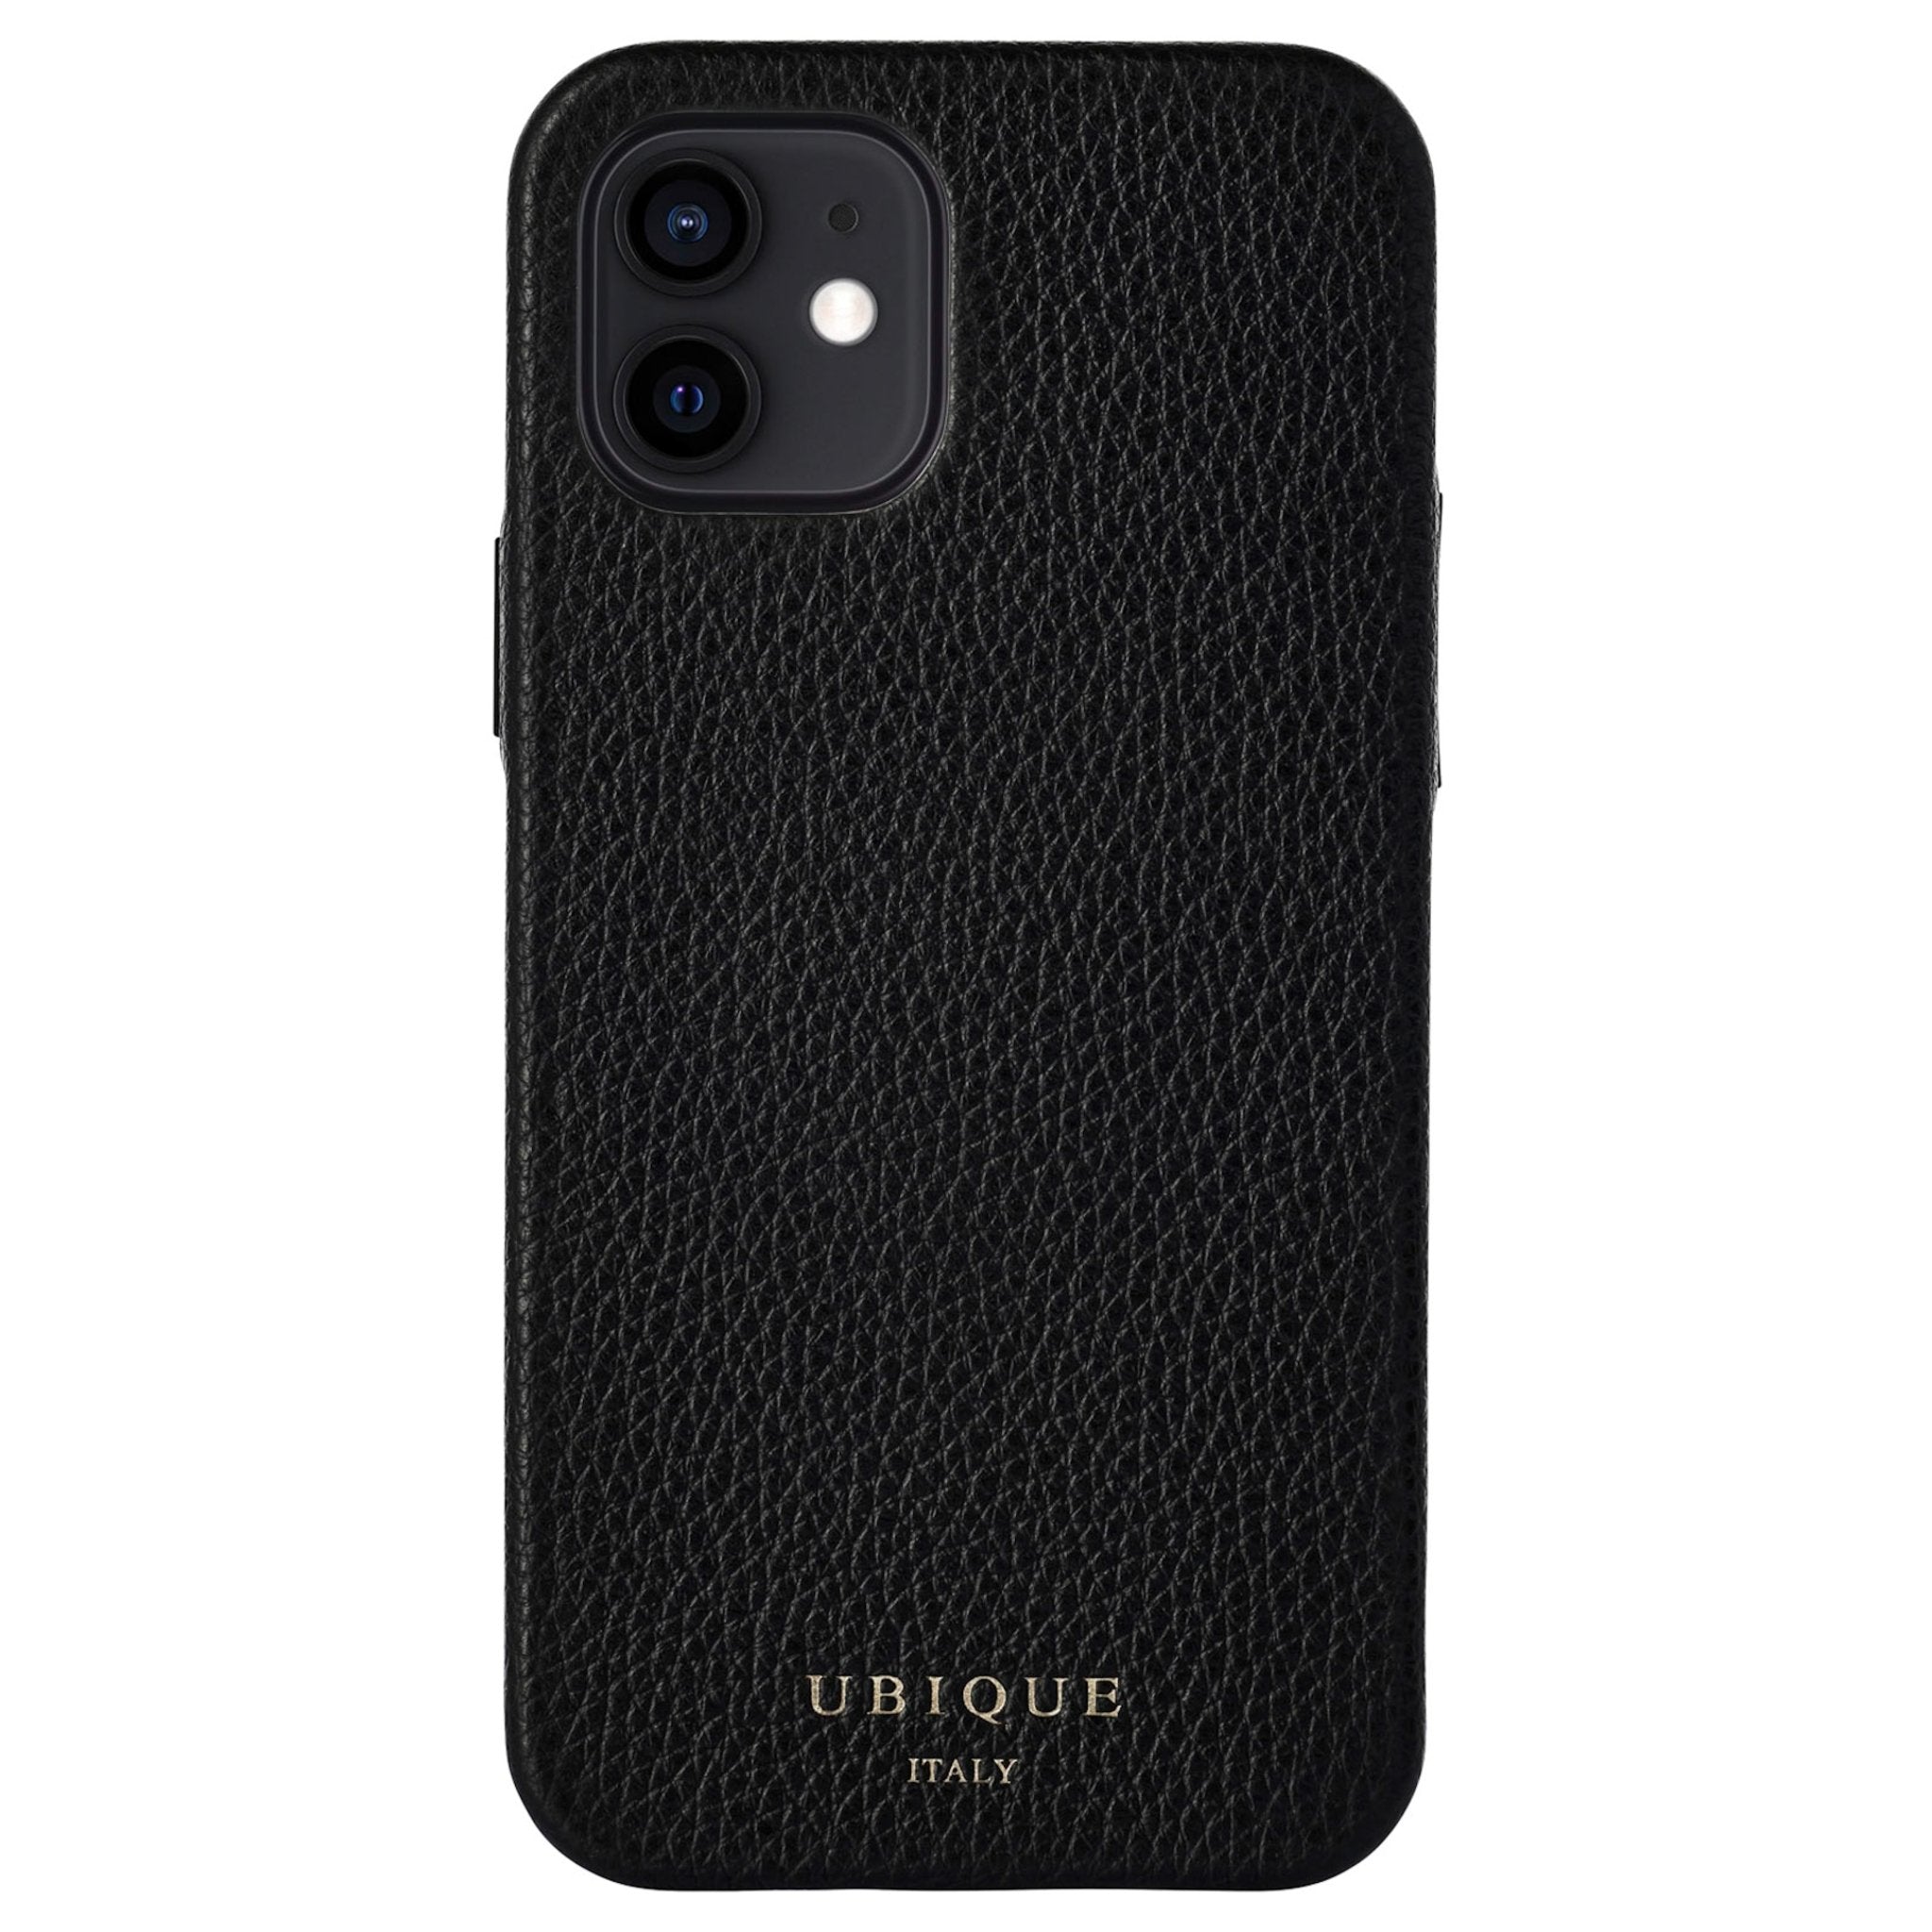 Ubique Italy Luxury iPhone Case 12 Pebble Grain Leather Black